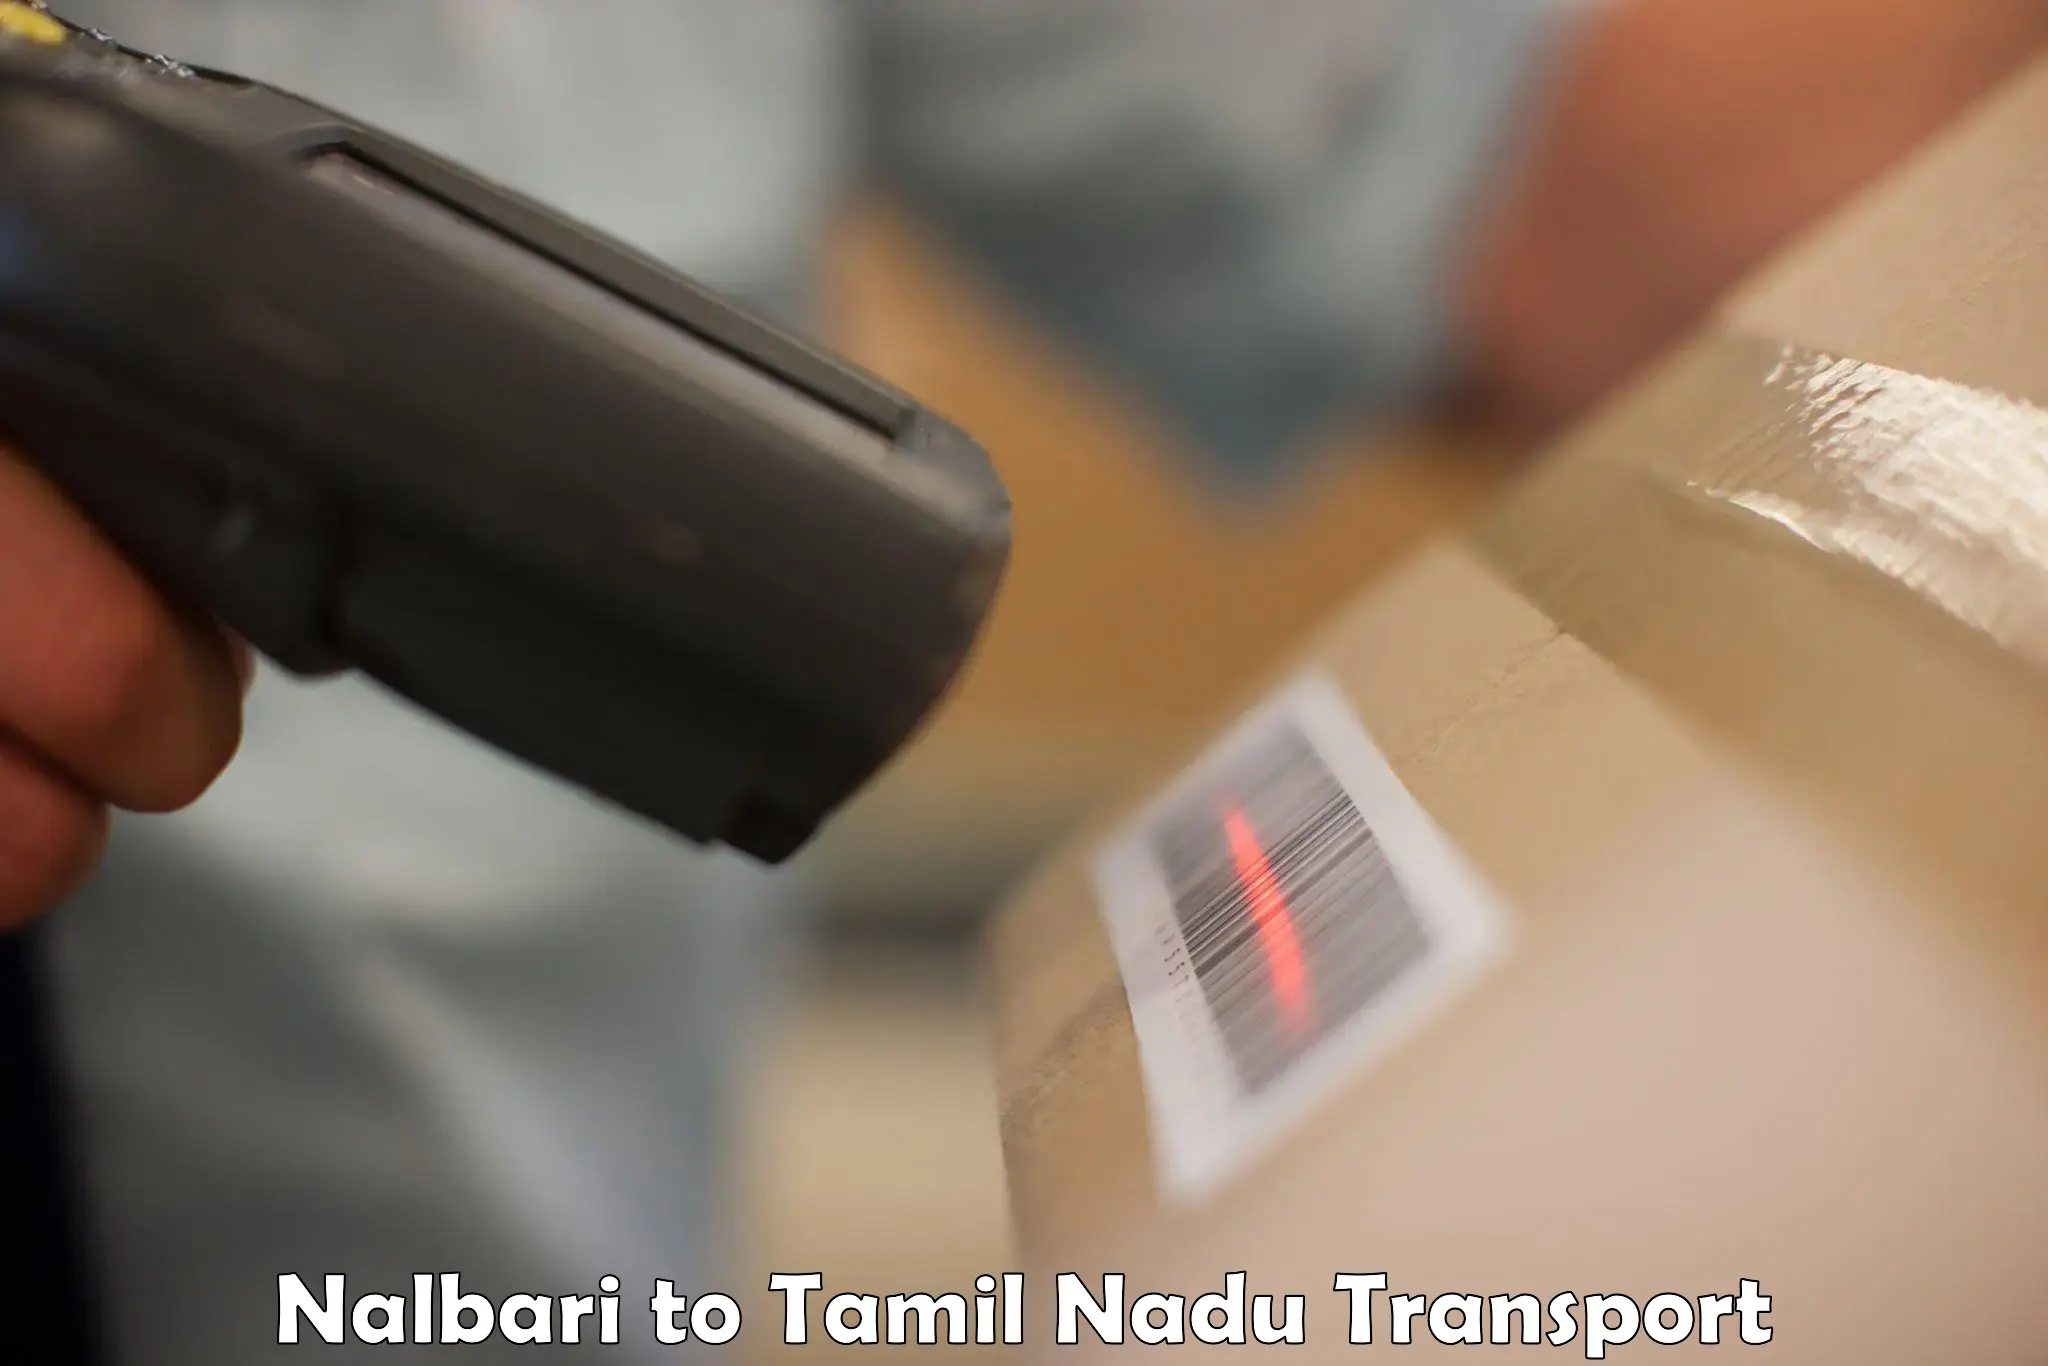 Transport bike from one state to another Nalbari to Kalpakkam